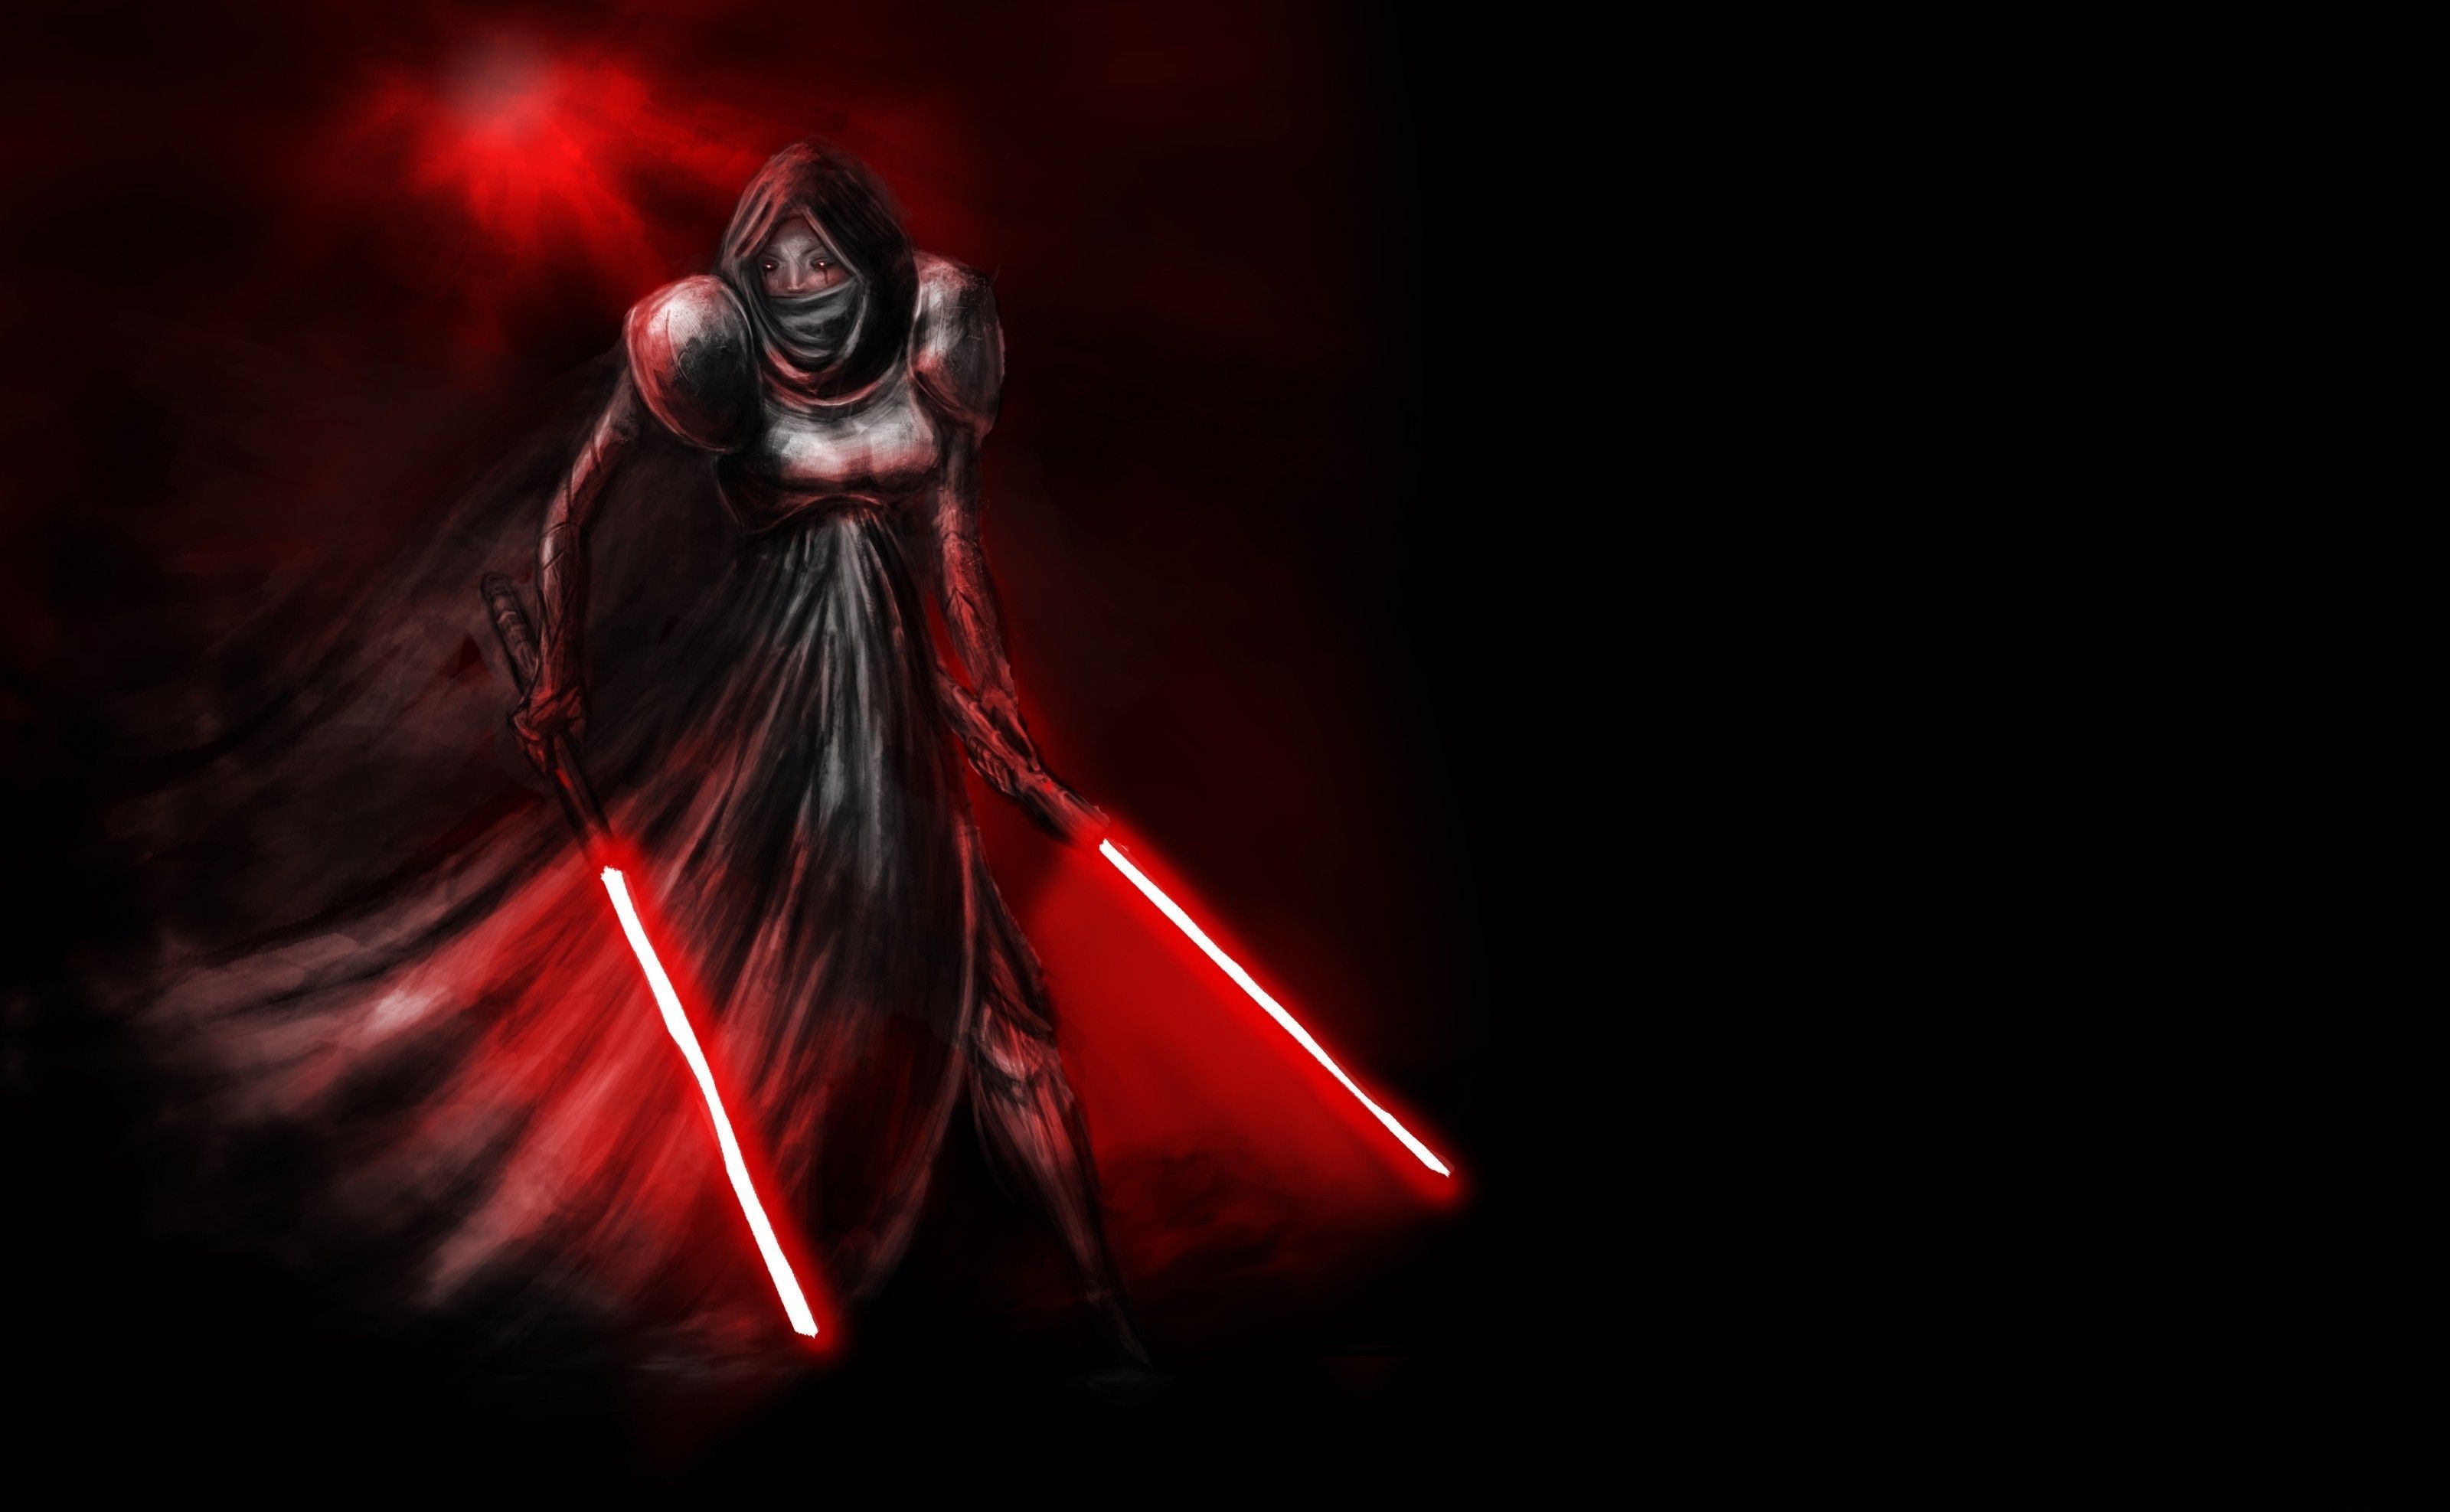 Star Wars Lightsaber Duel Wallpaper background picture